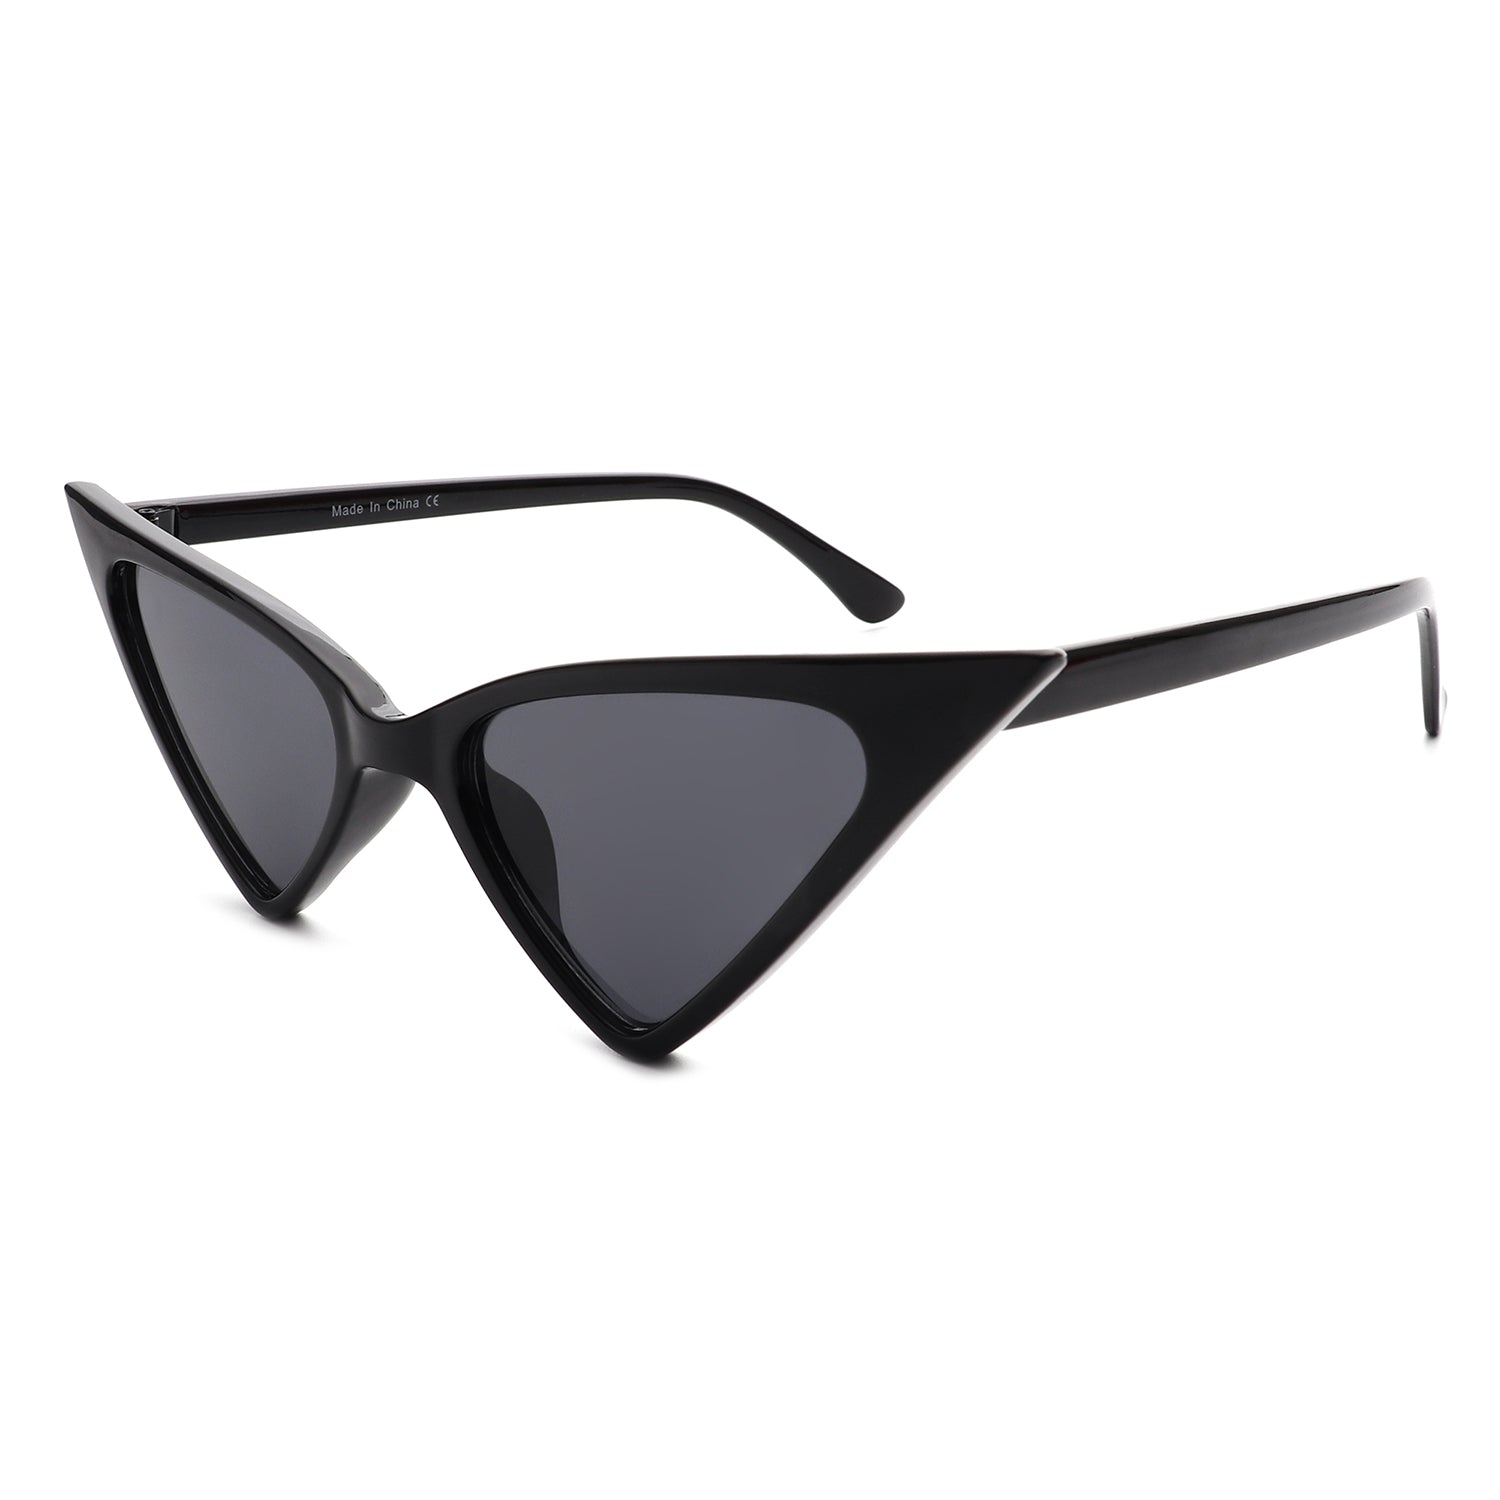 S1179 - VINTAGE Triangle High Pointed Cat Eye Retro Fashion Sunglasses Black